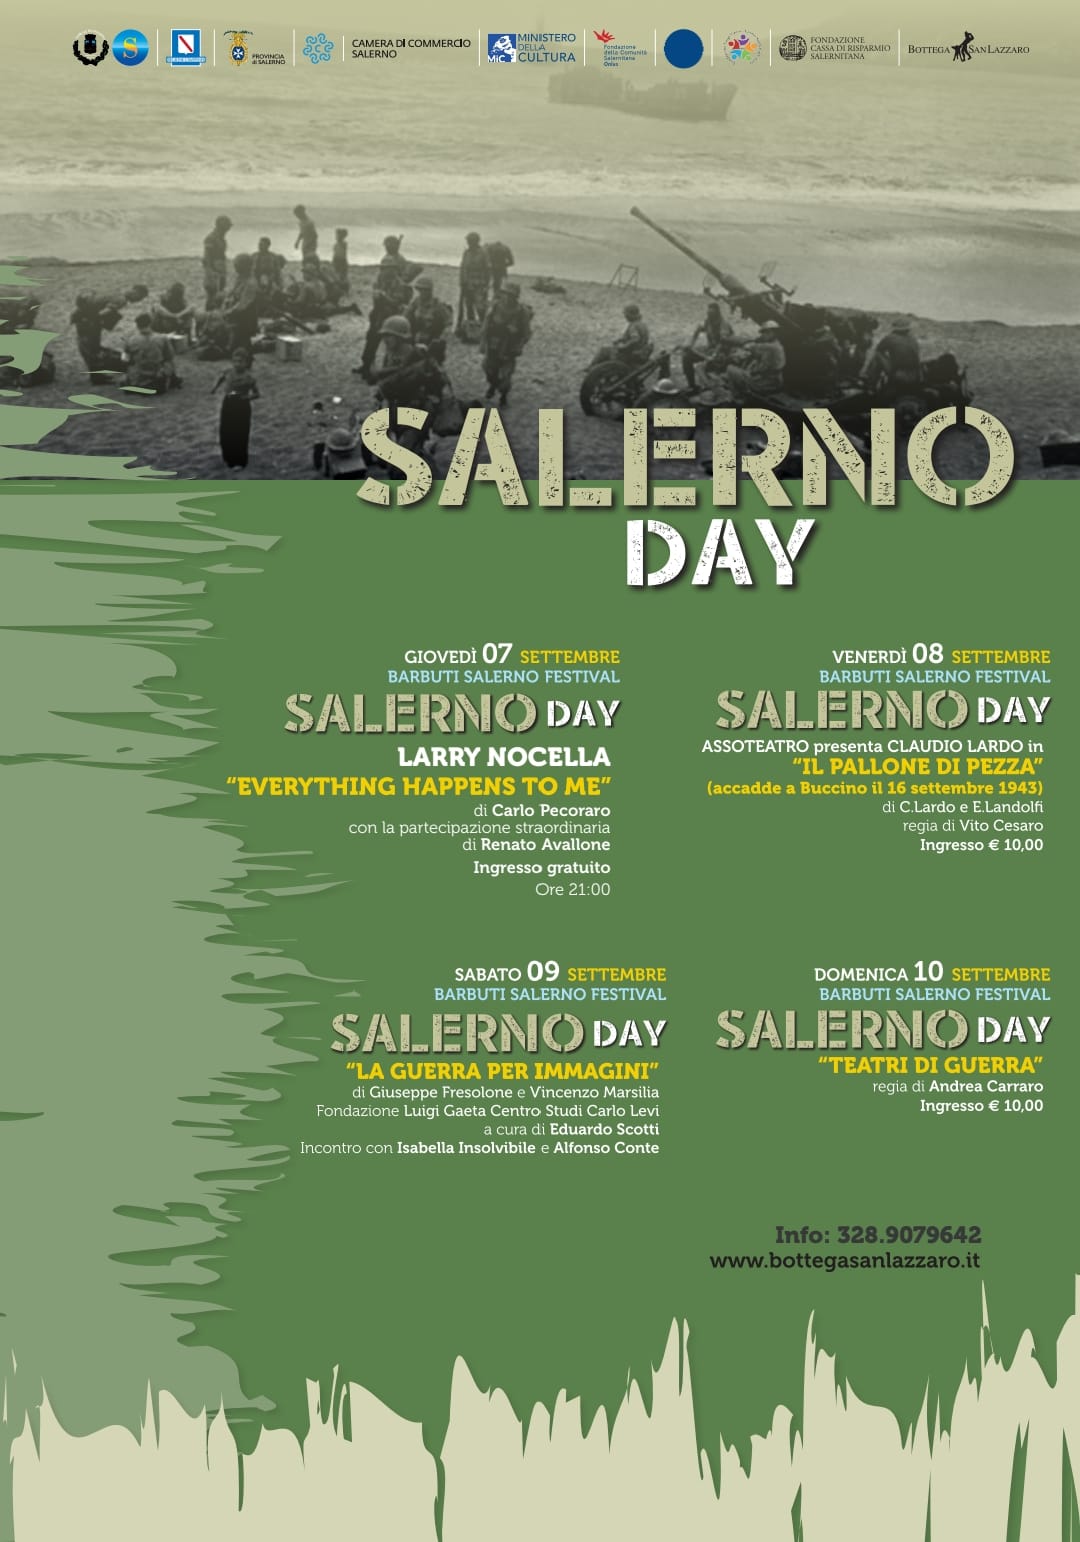   salerno day
